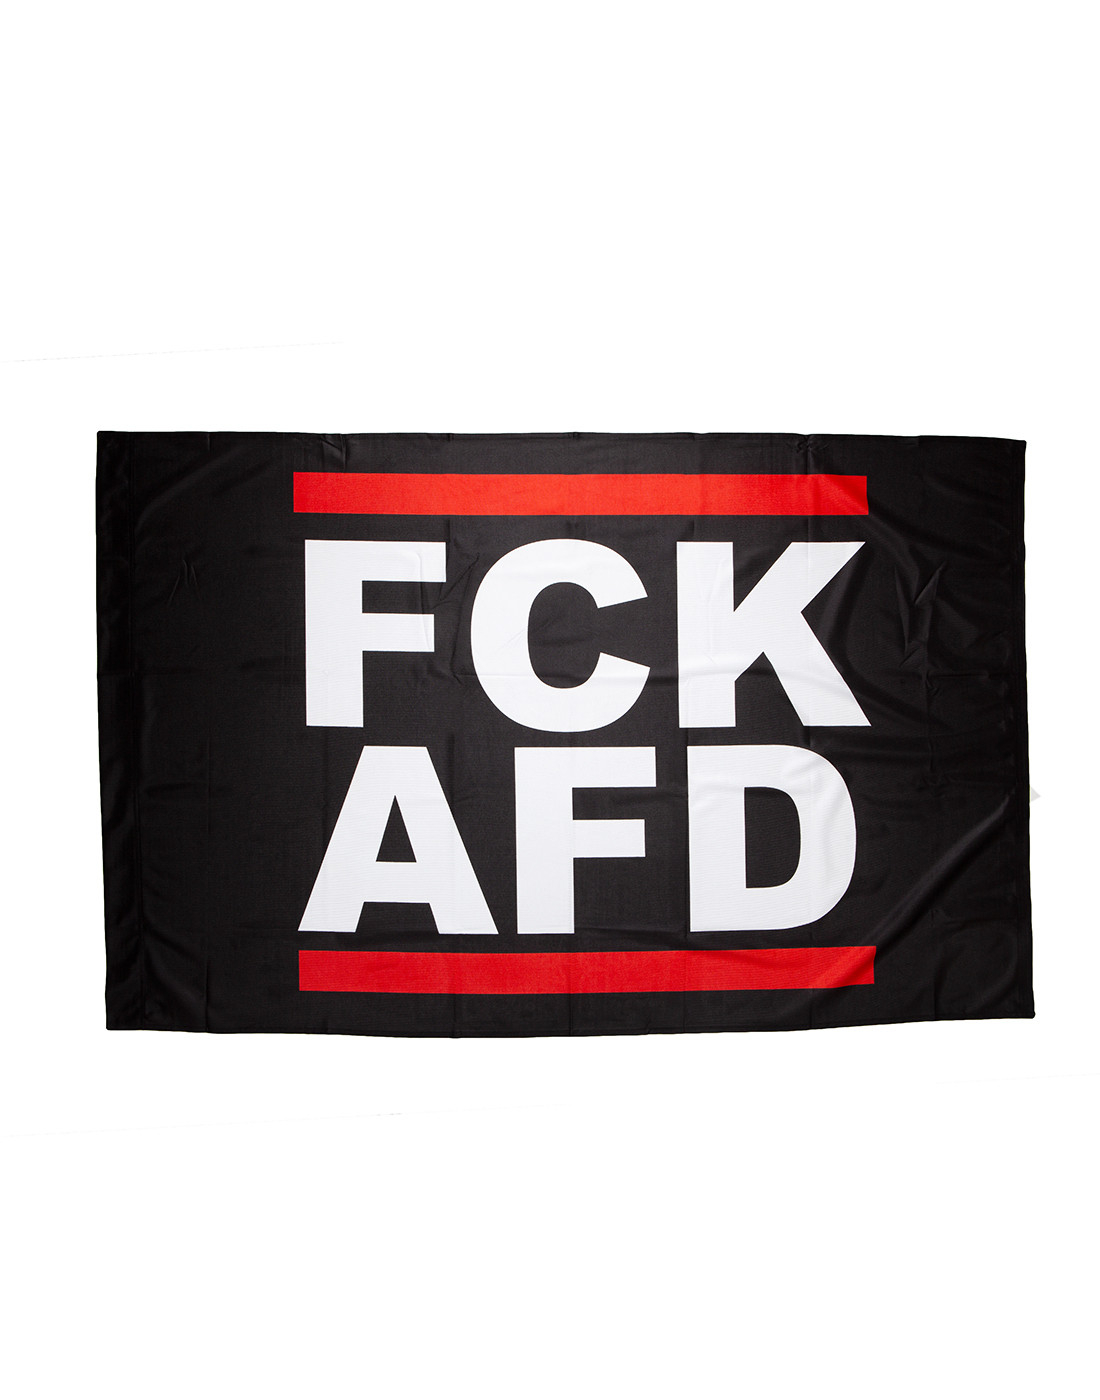 FCK AFD - Fahne hier bestellen